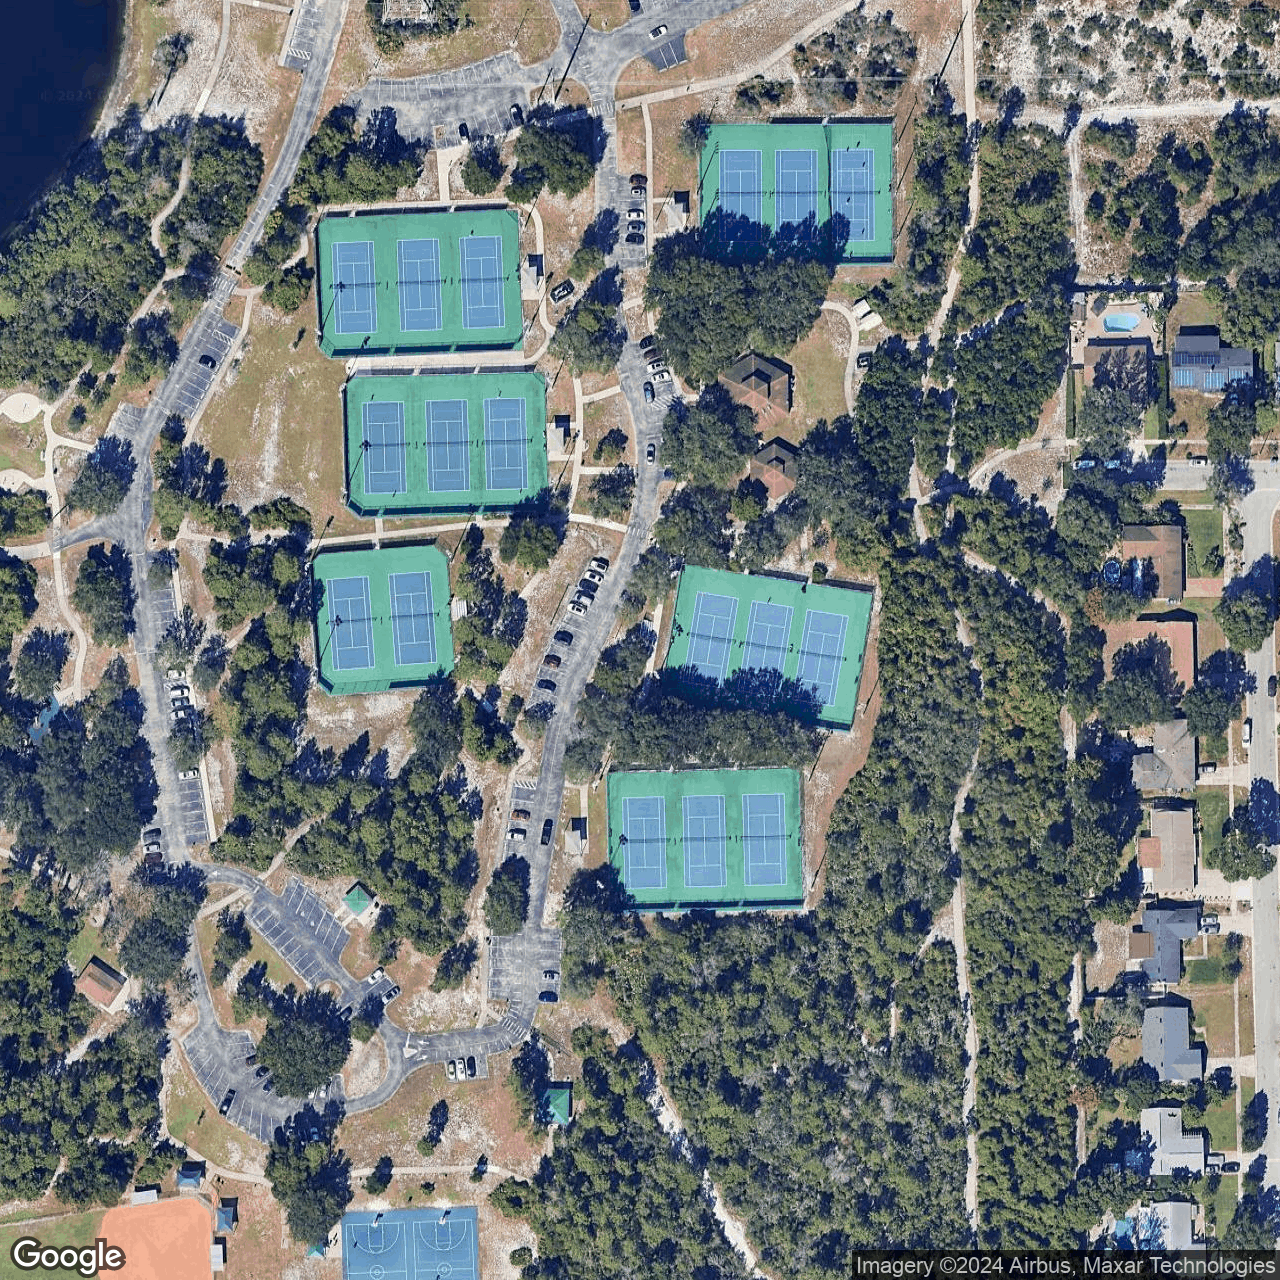 Lake Cane Tennis Center